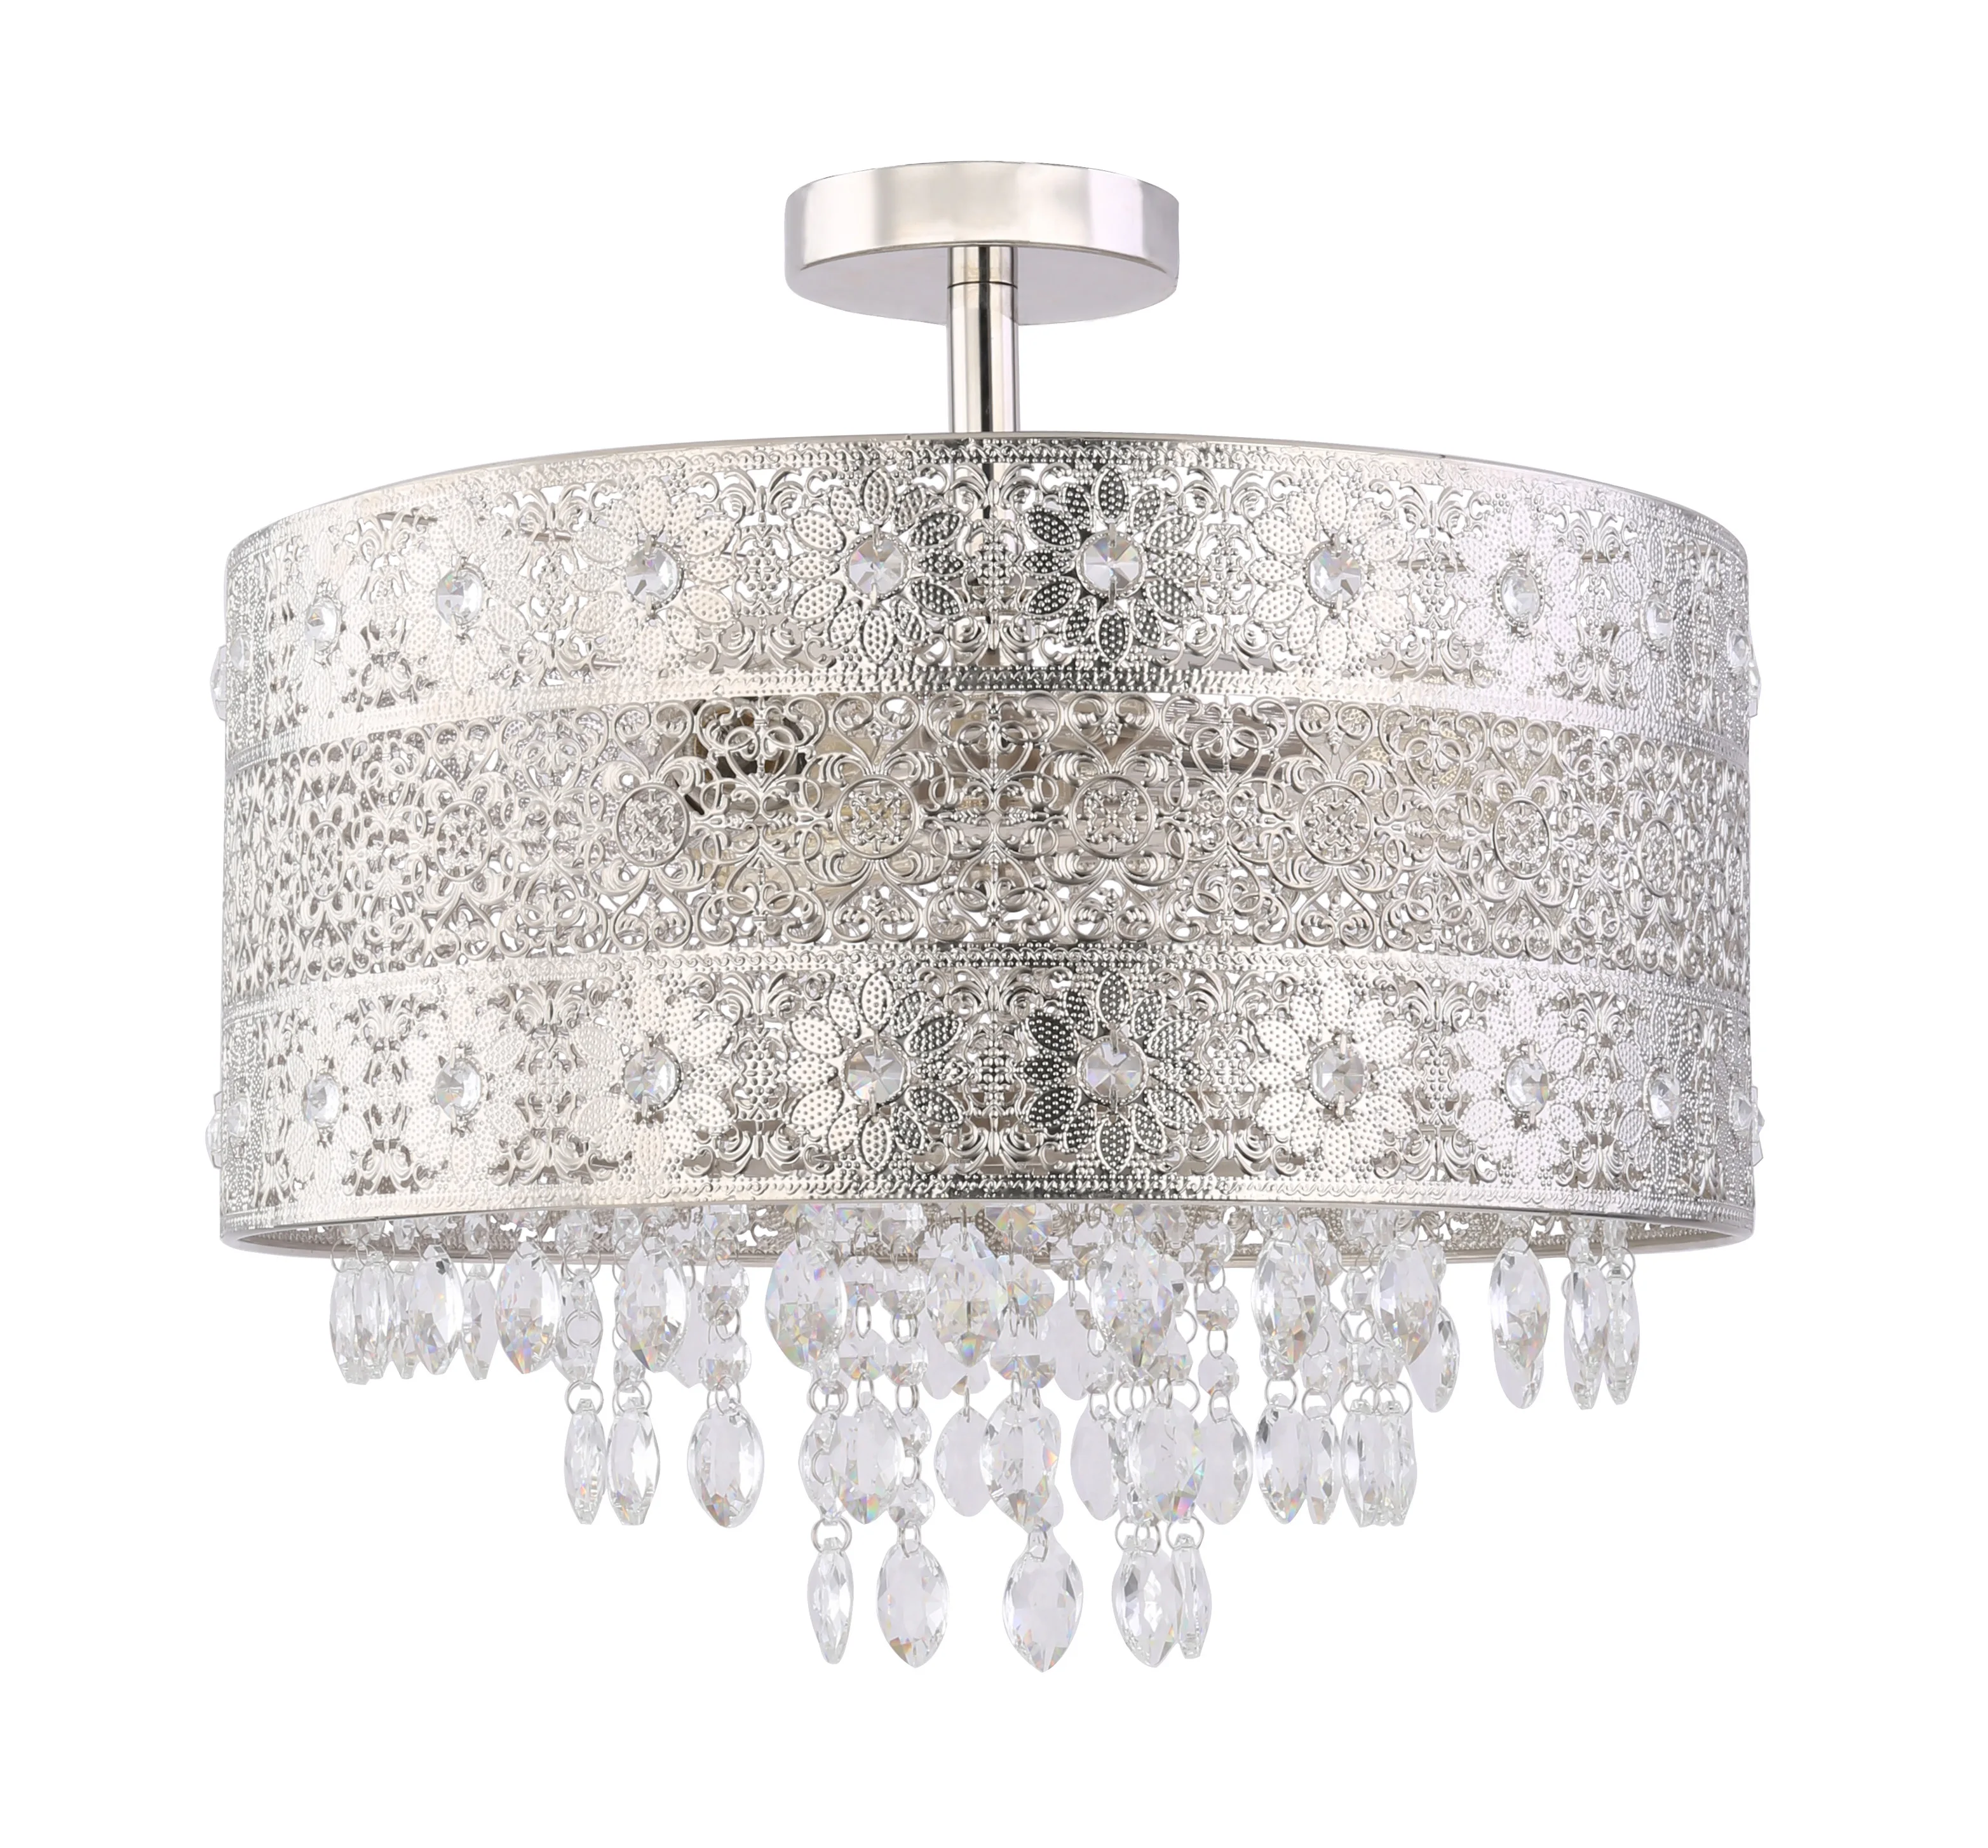 Modern circle Semi Flush Mount Pendant Lighting 3-Lights luxury chandelier Crystal bead Ceiling Lamp for Kitchen Dining Room